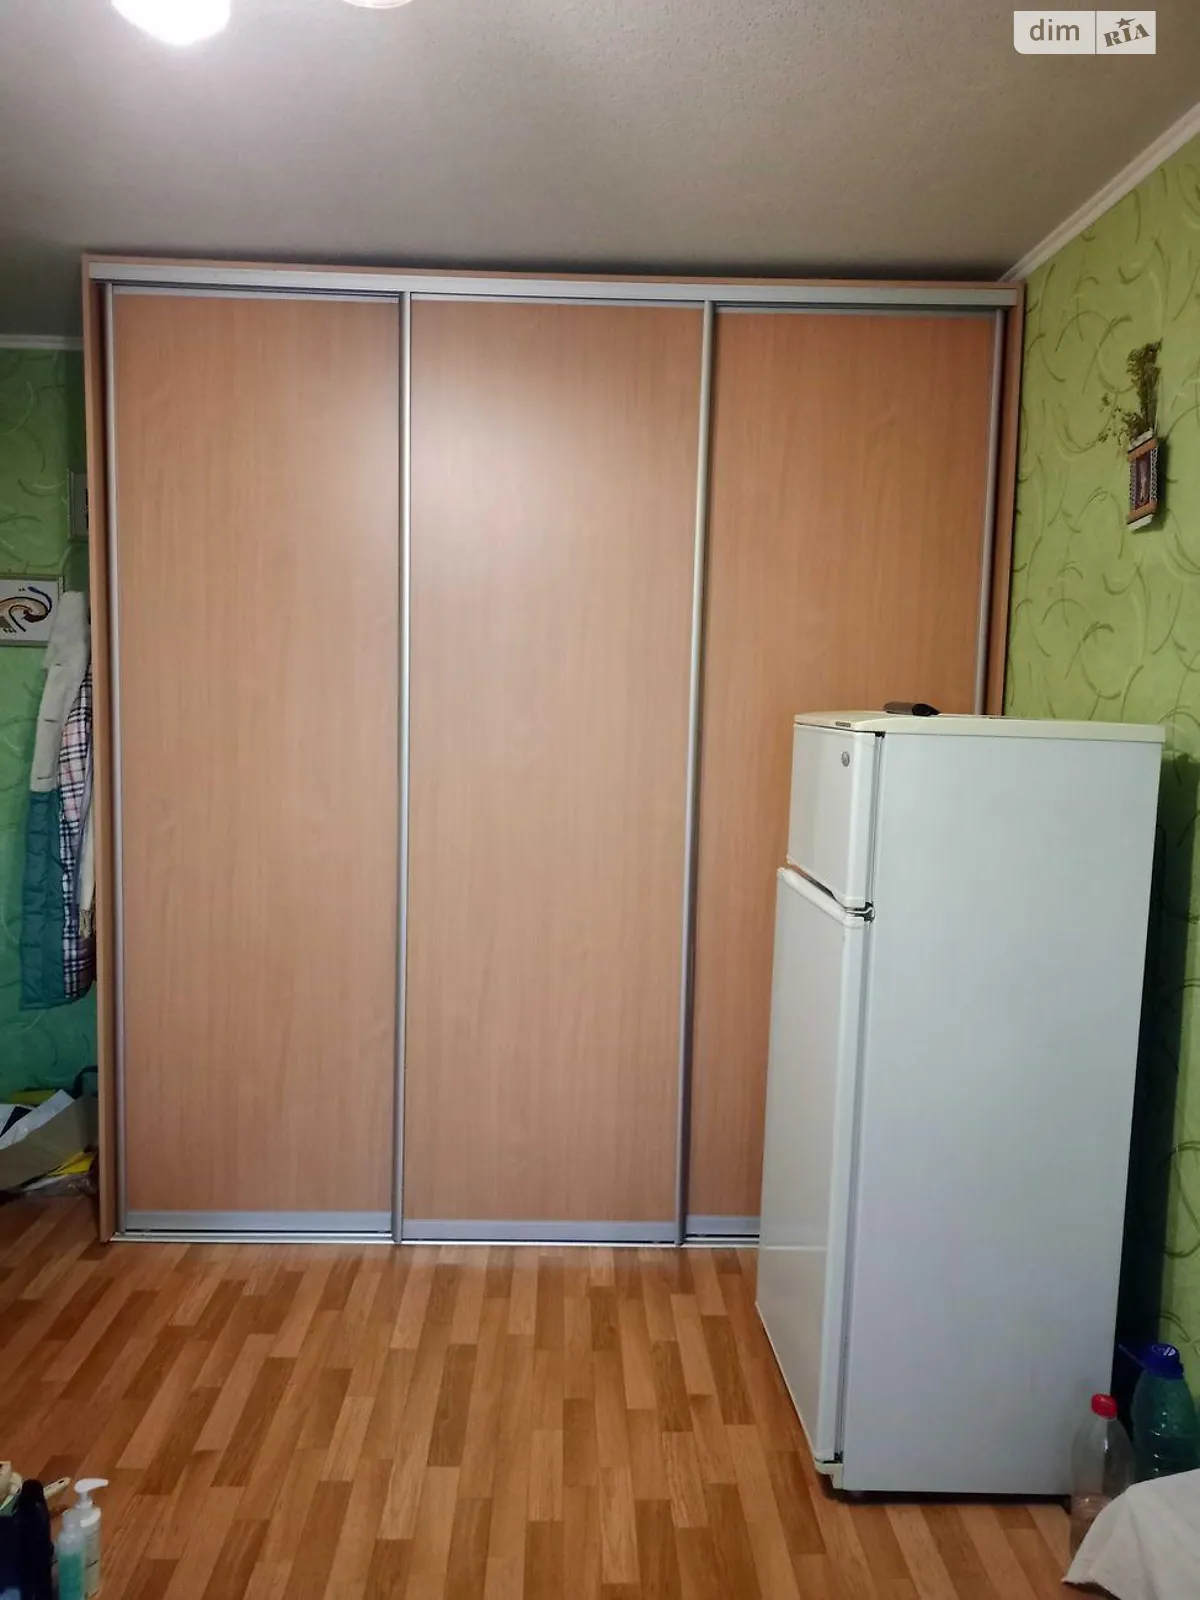 Продается комната 26 кв. м в Харькове - фото 3